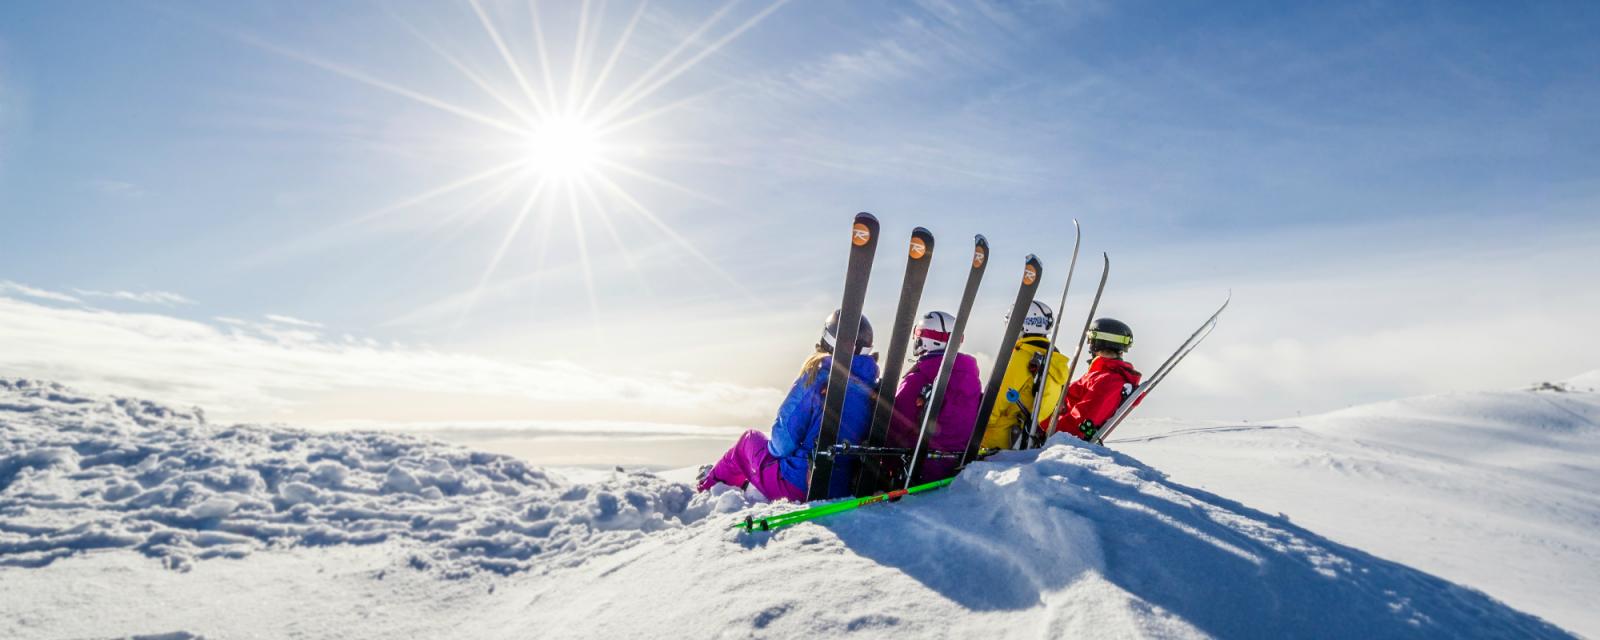 Ski & City: wintersporten voor alle niveaus in Trysil 